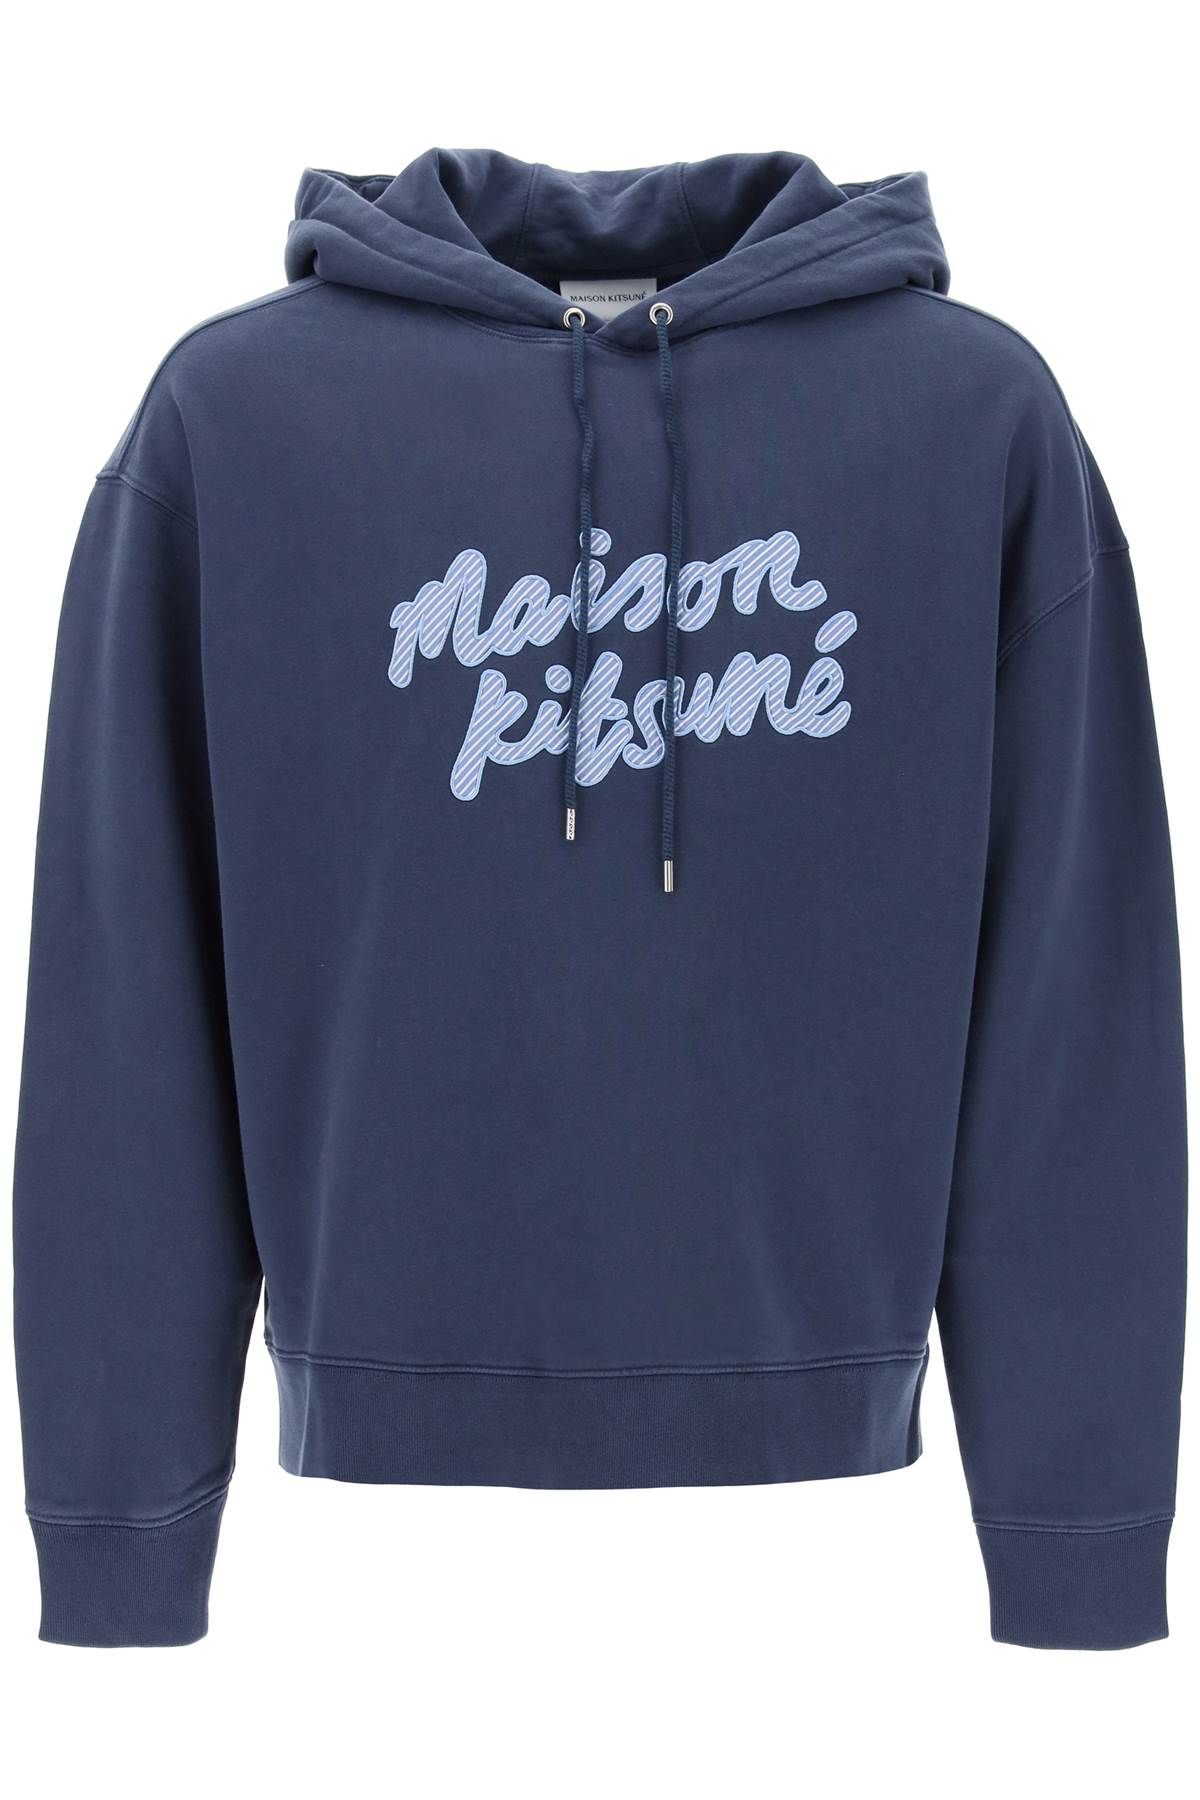 Maison kitsune hooded sweatshirt with embroidered logo-0